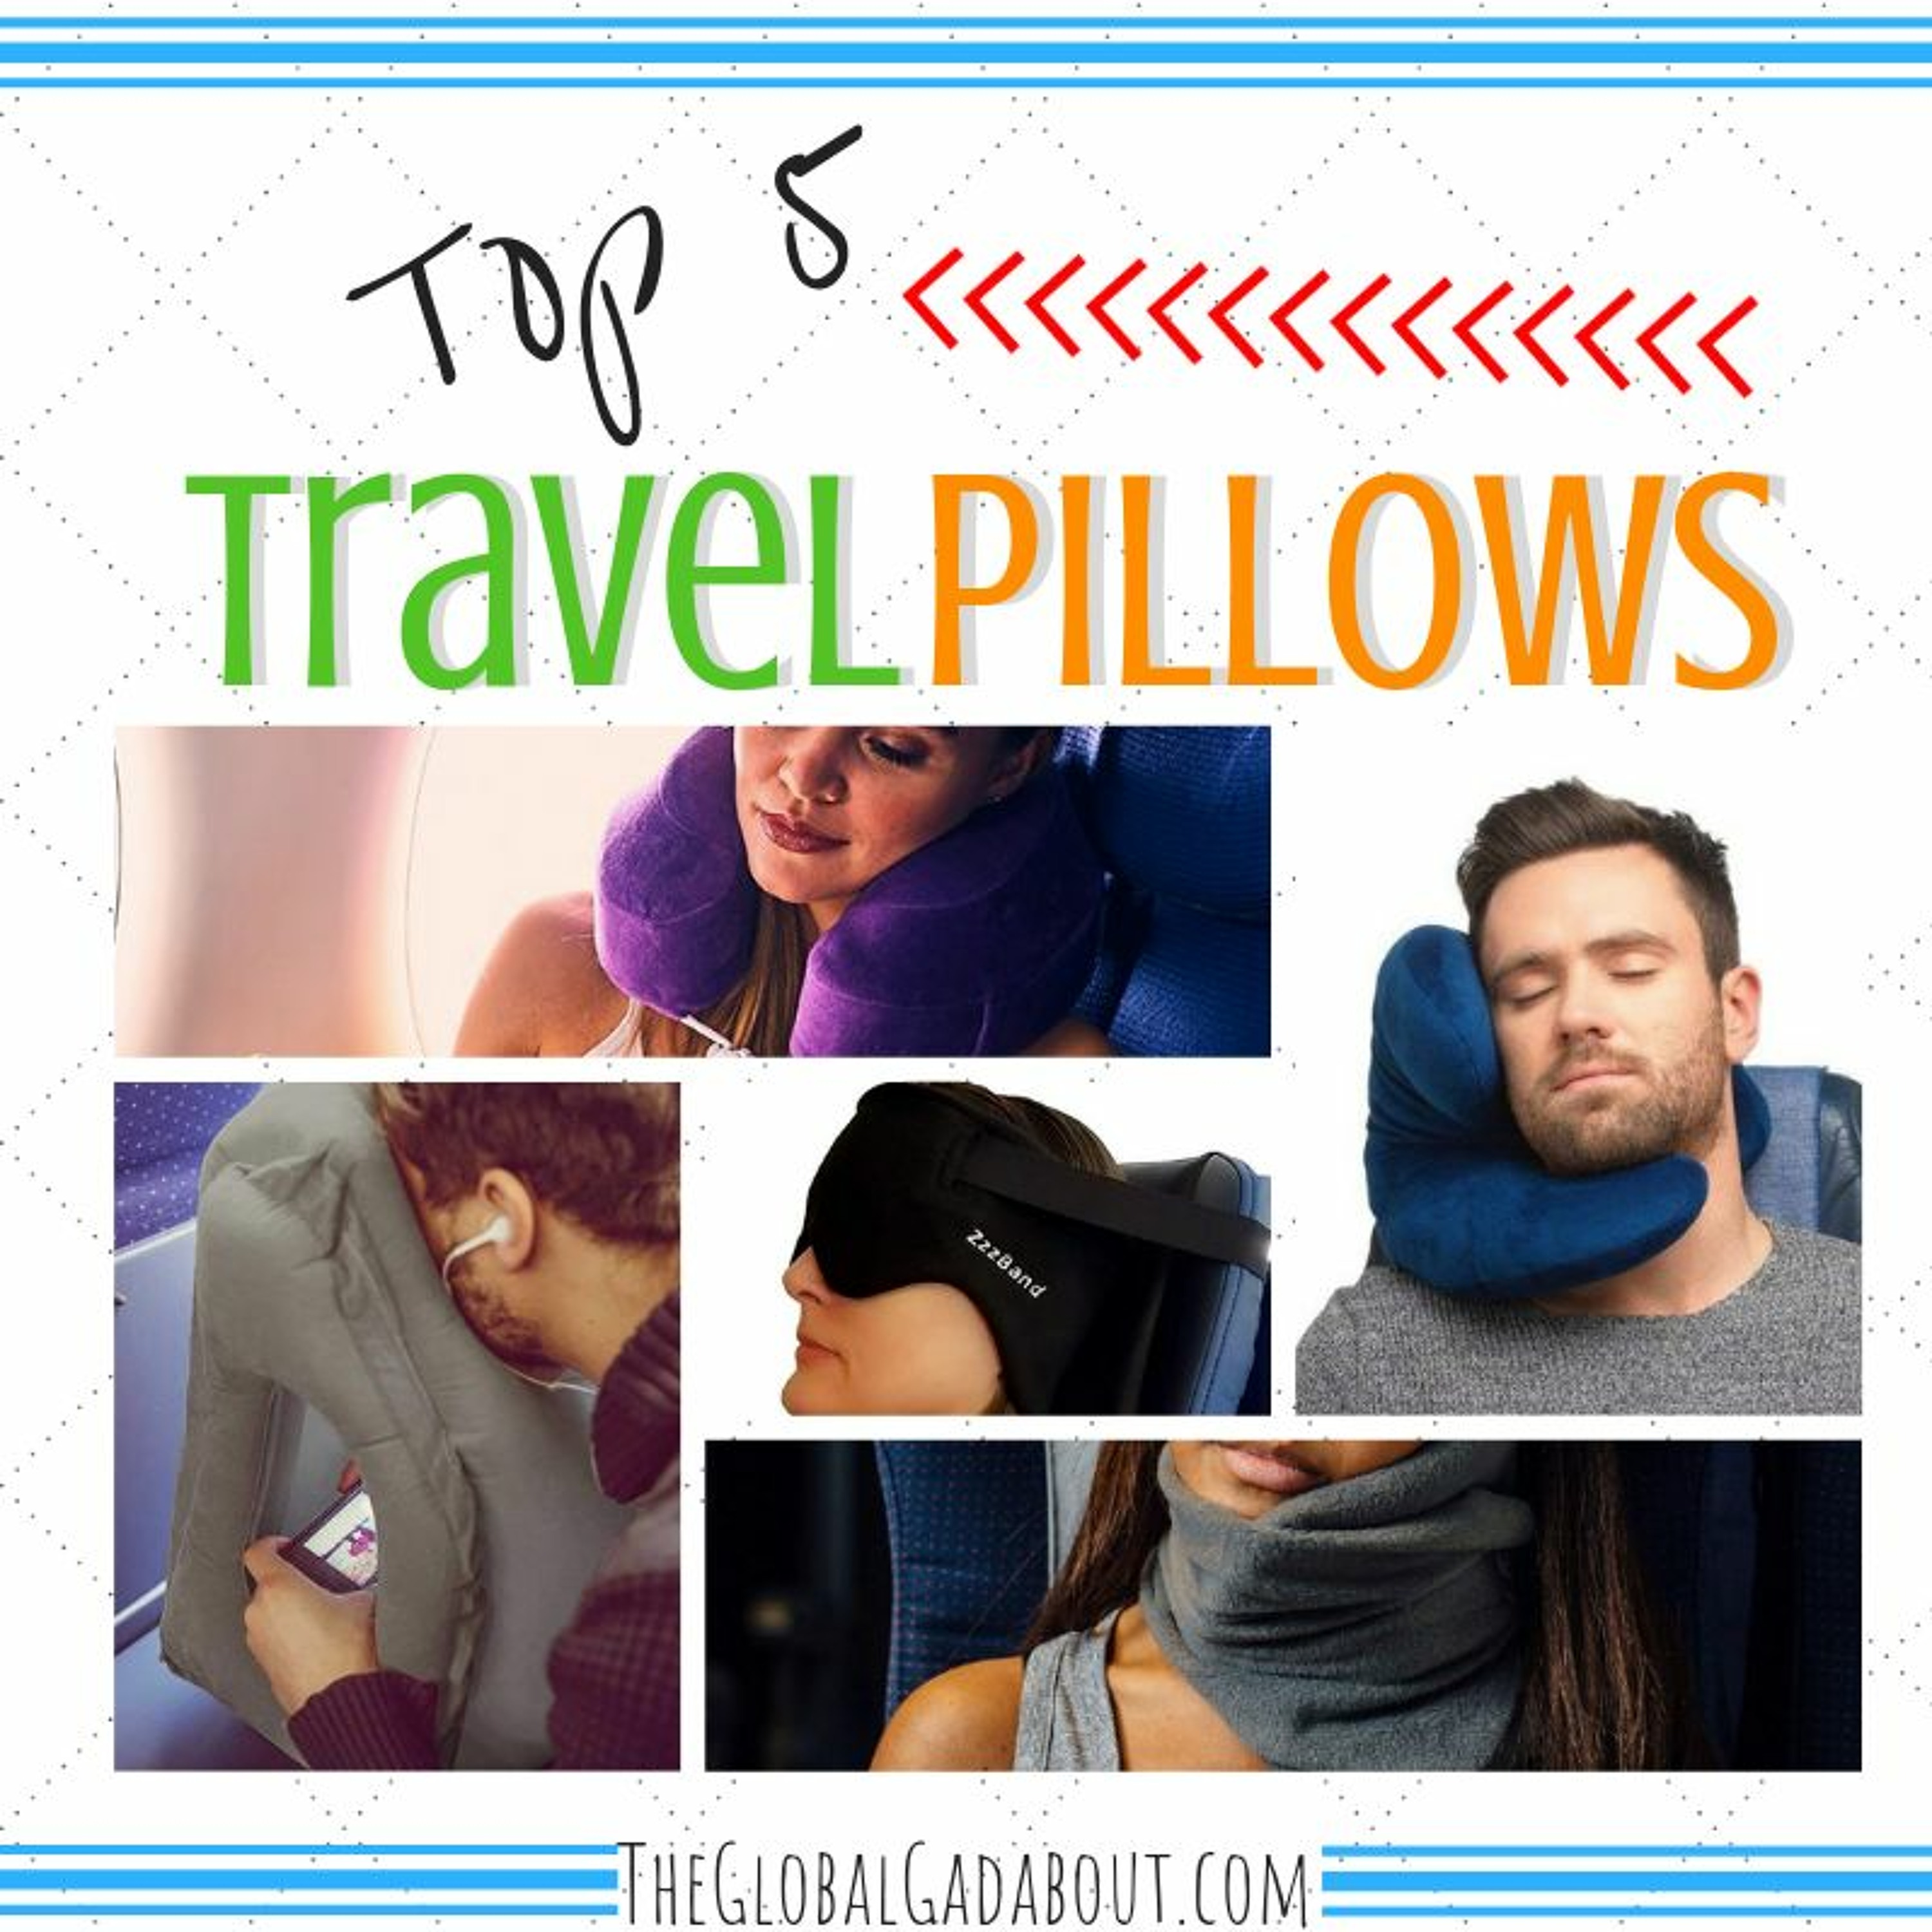 Top 5 Travel Pillows